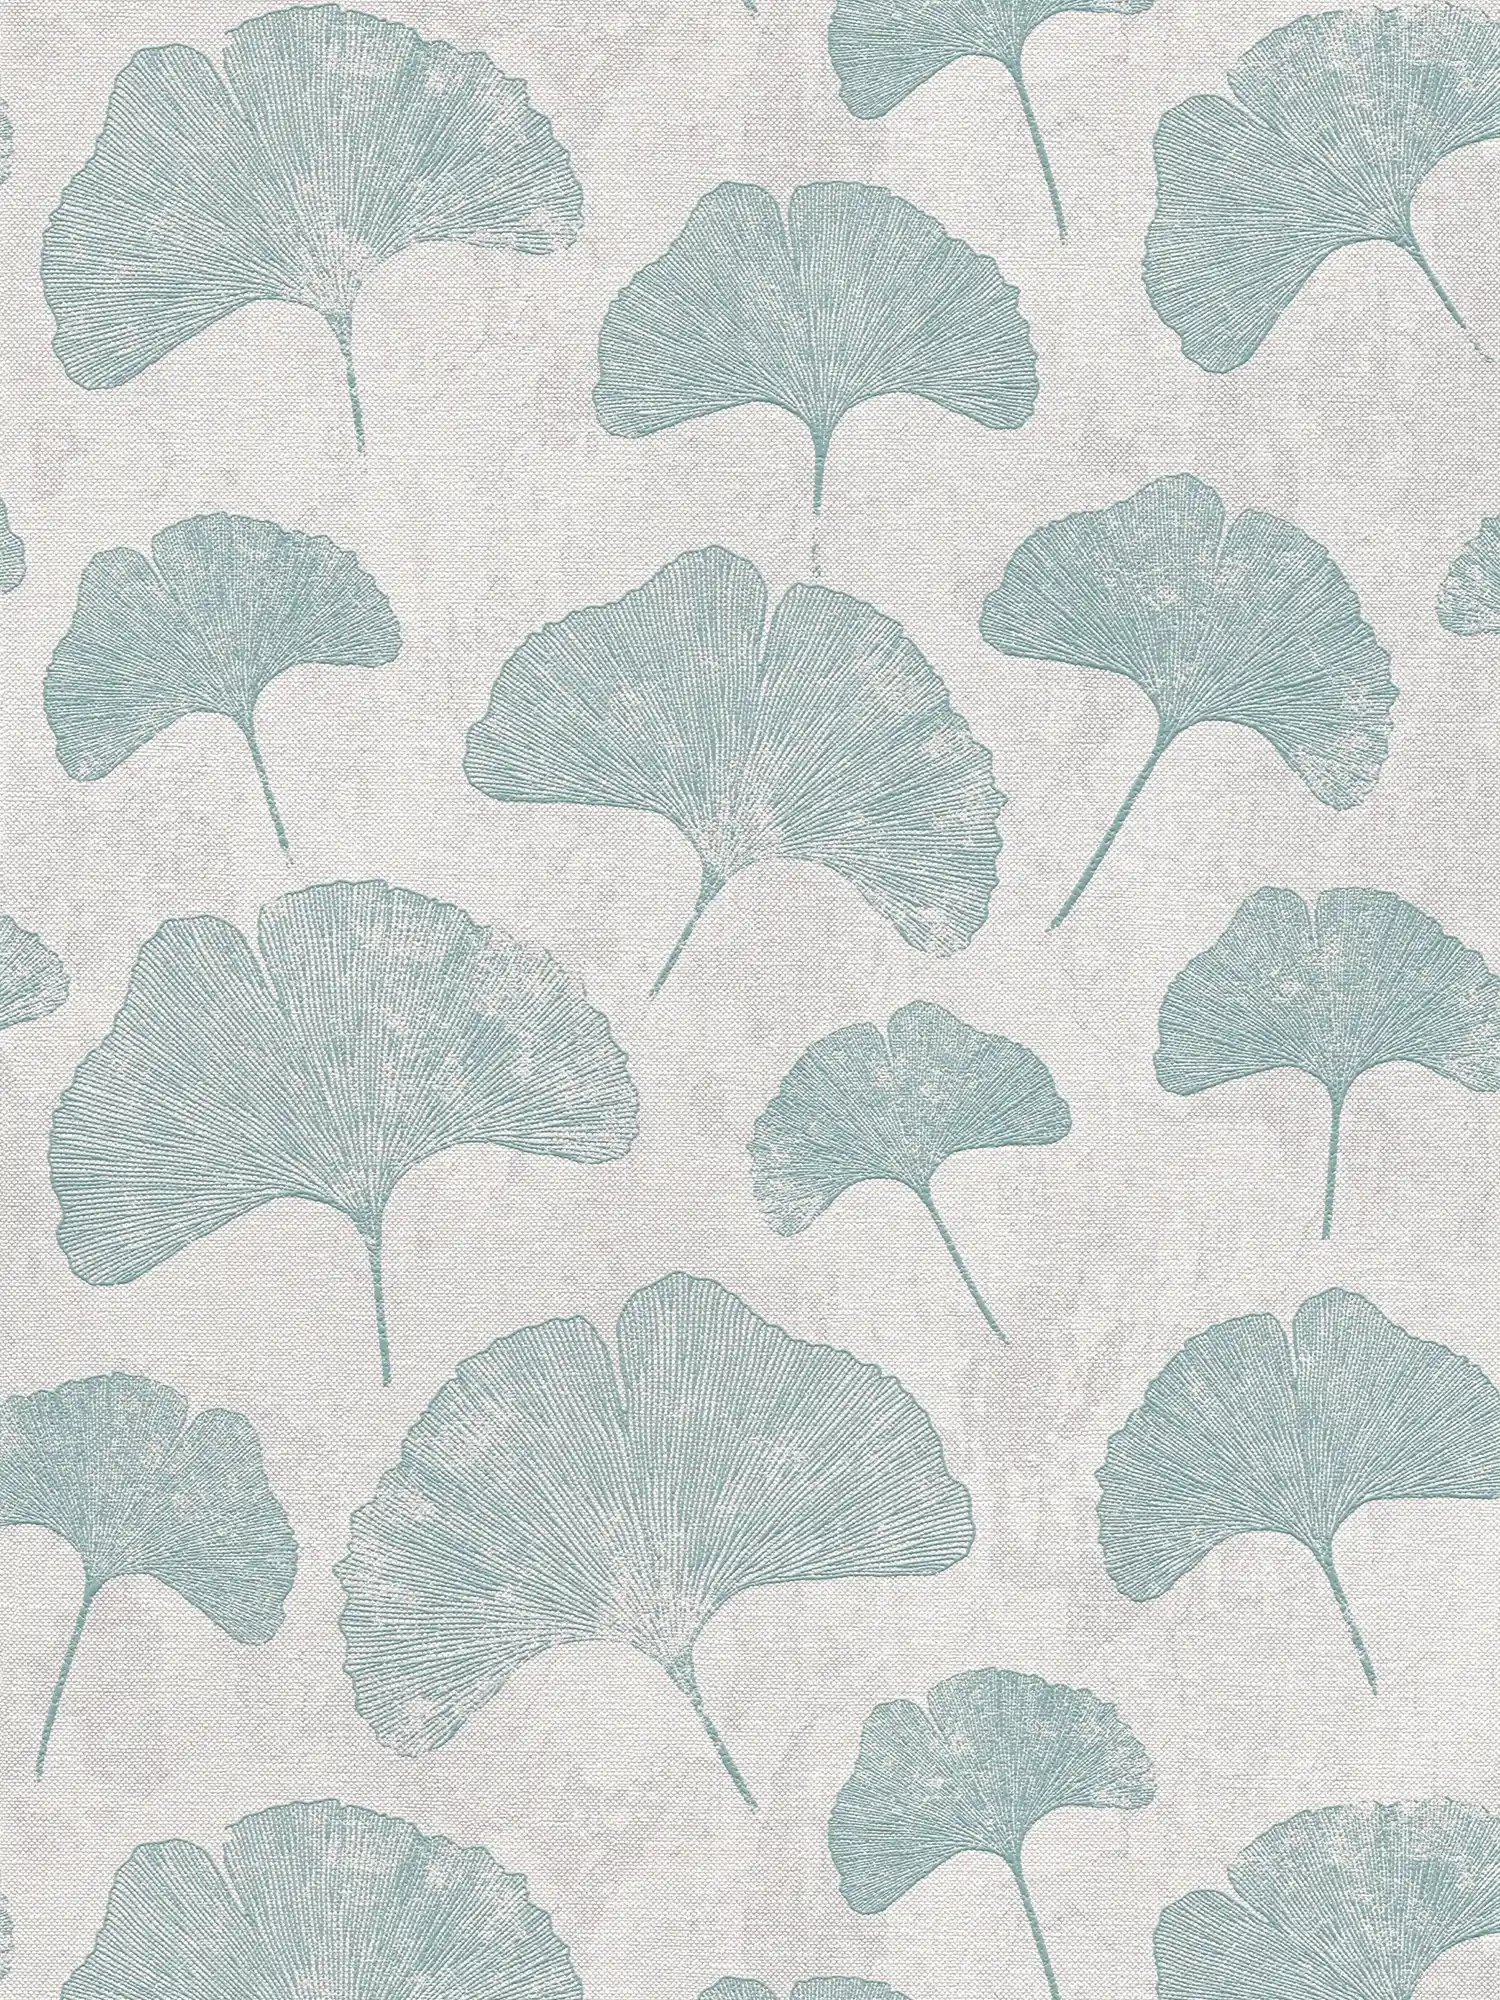         Carta da parati opaca con foglie floreali - menta, grigio
    